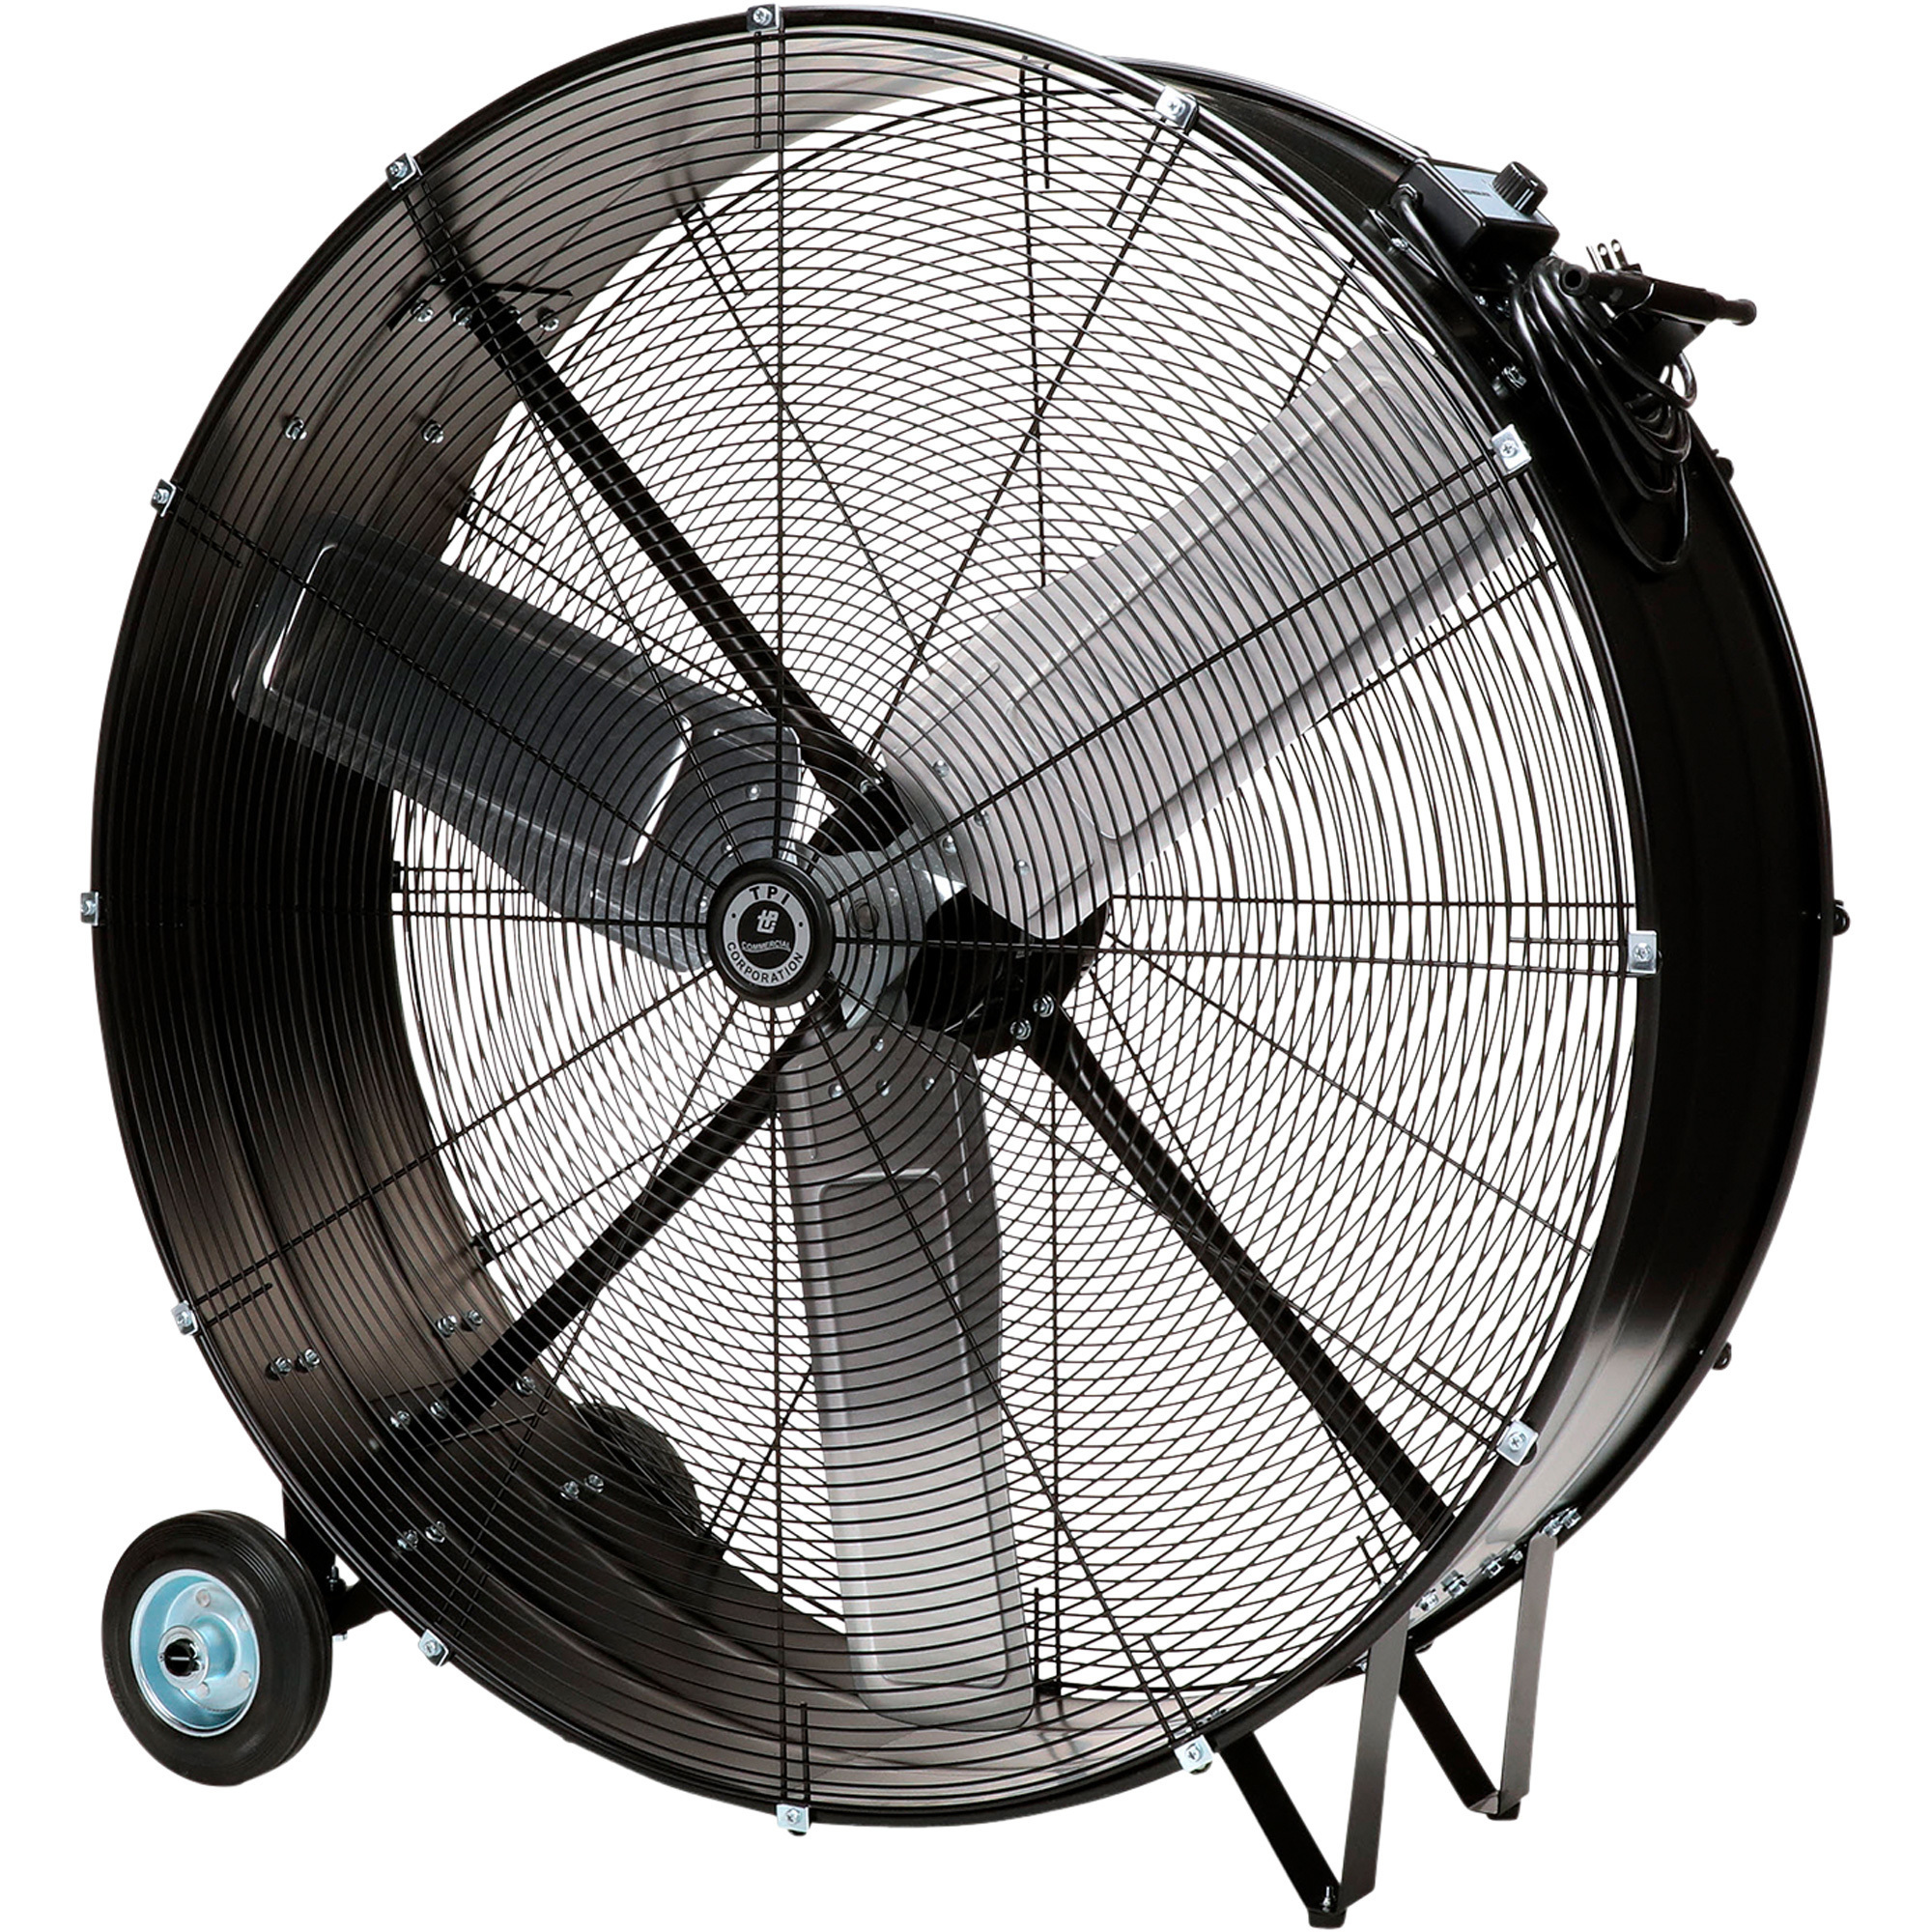 TPI Commercial Drum Fan, 36in., 1/3 HP, 8,500 CFM, Model# CPB36D